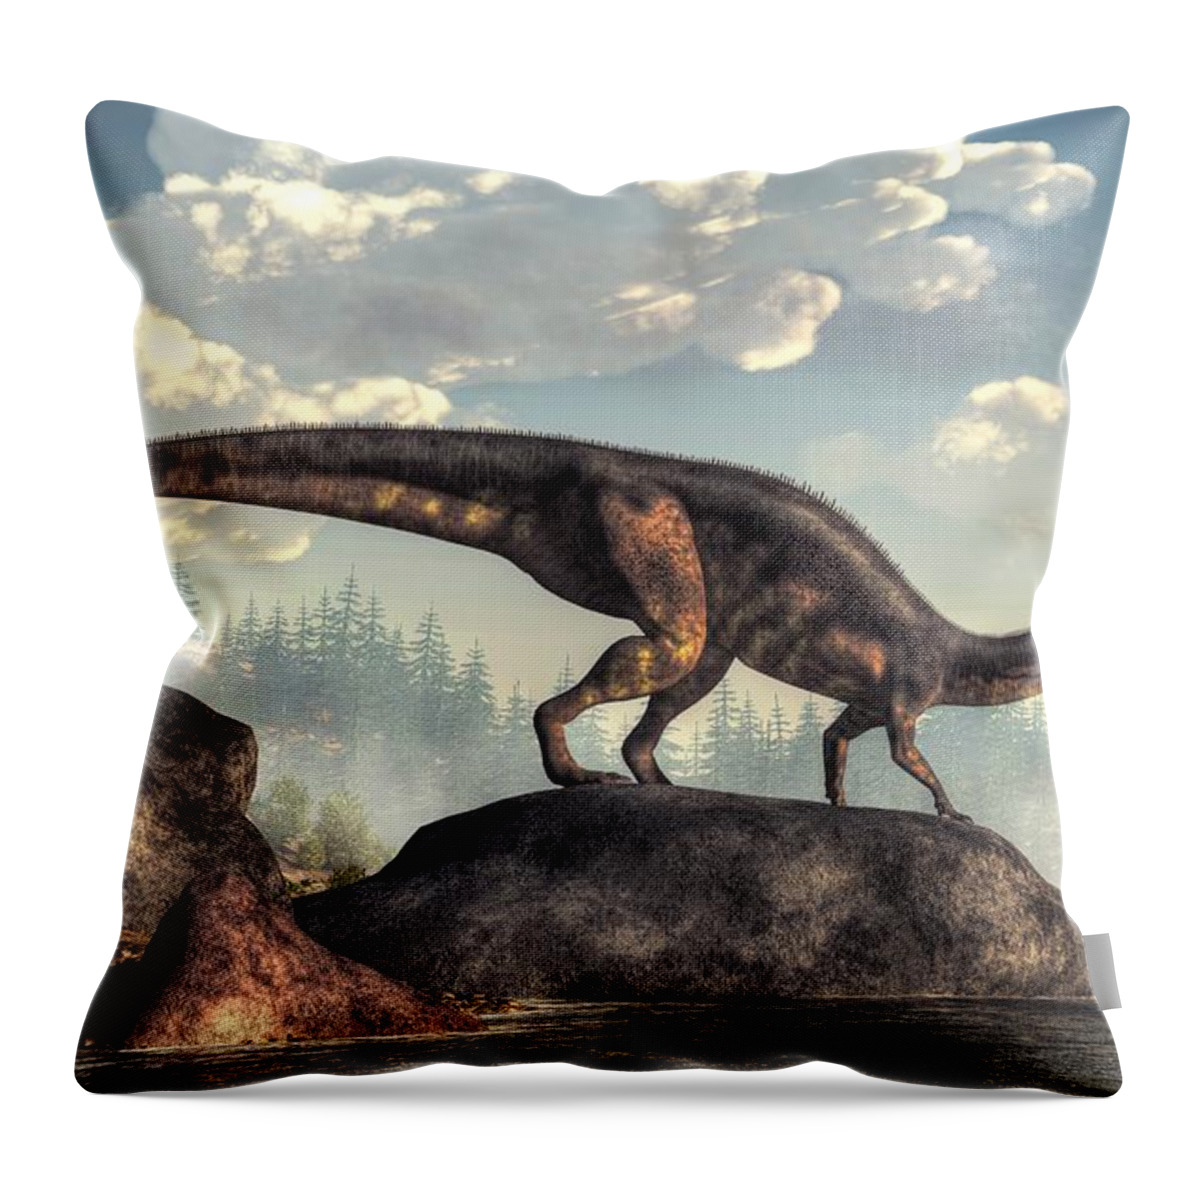 Plateosaurus Throw Pillow featuring the digital art Plateosaurus by Daniel Eskridge